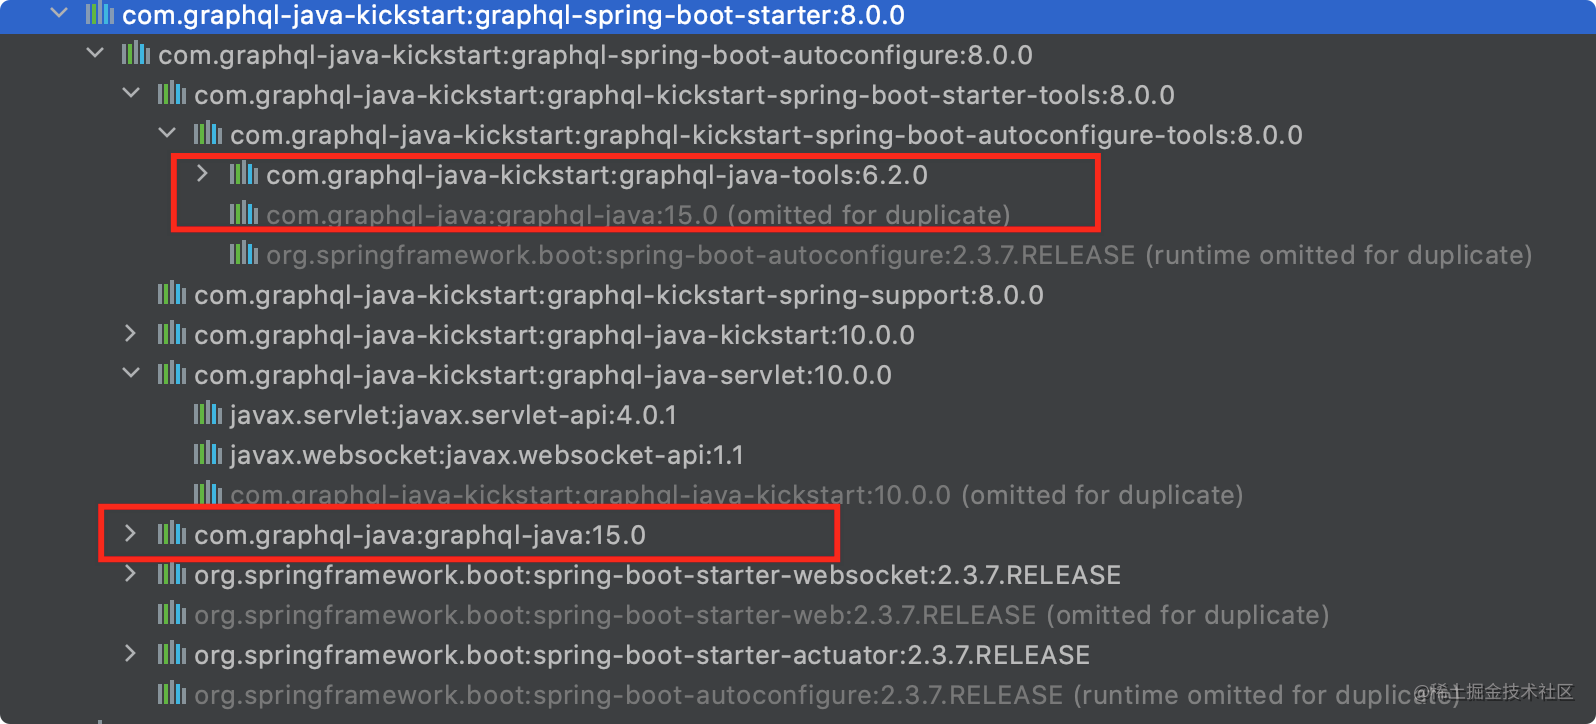 graphql-spring-boot-starter 相关依赖